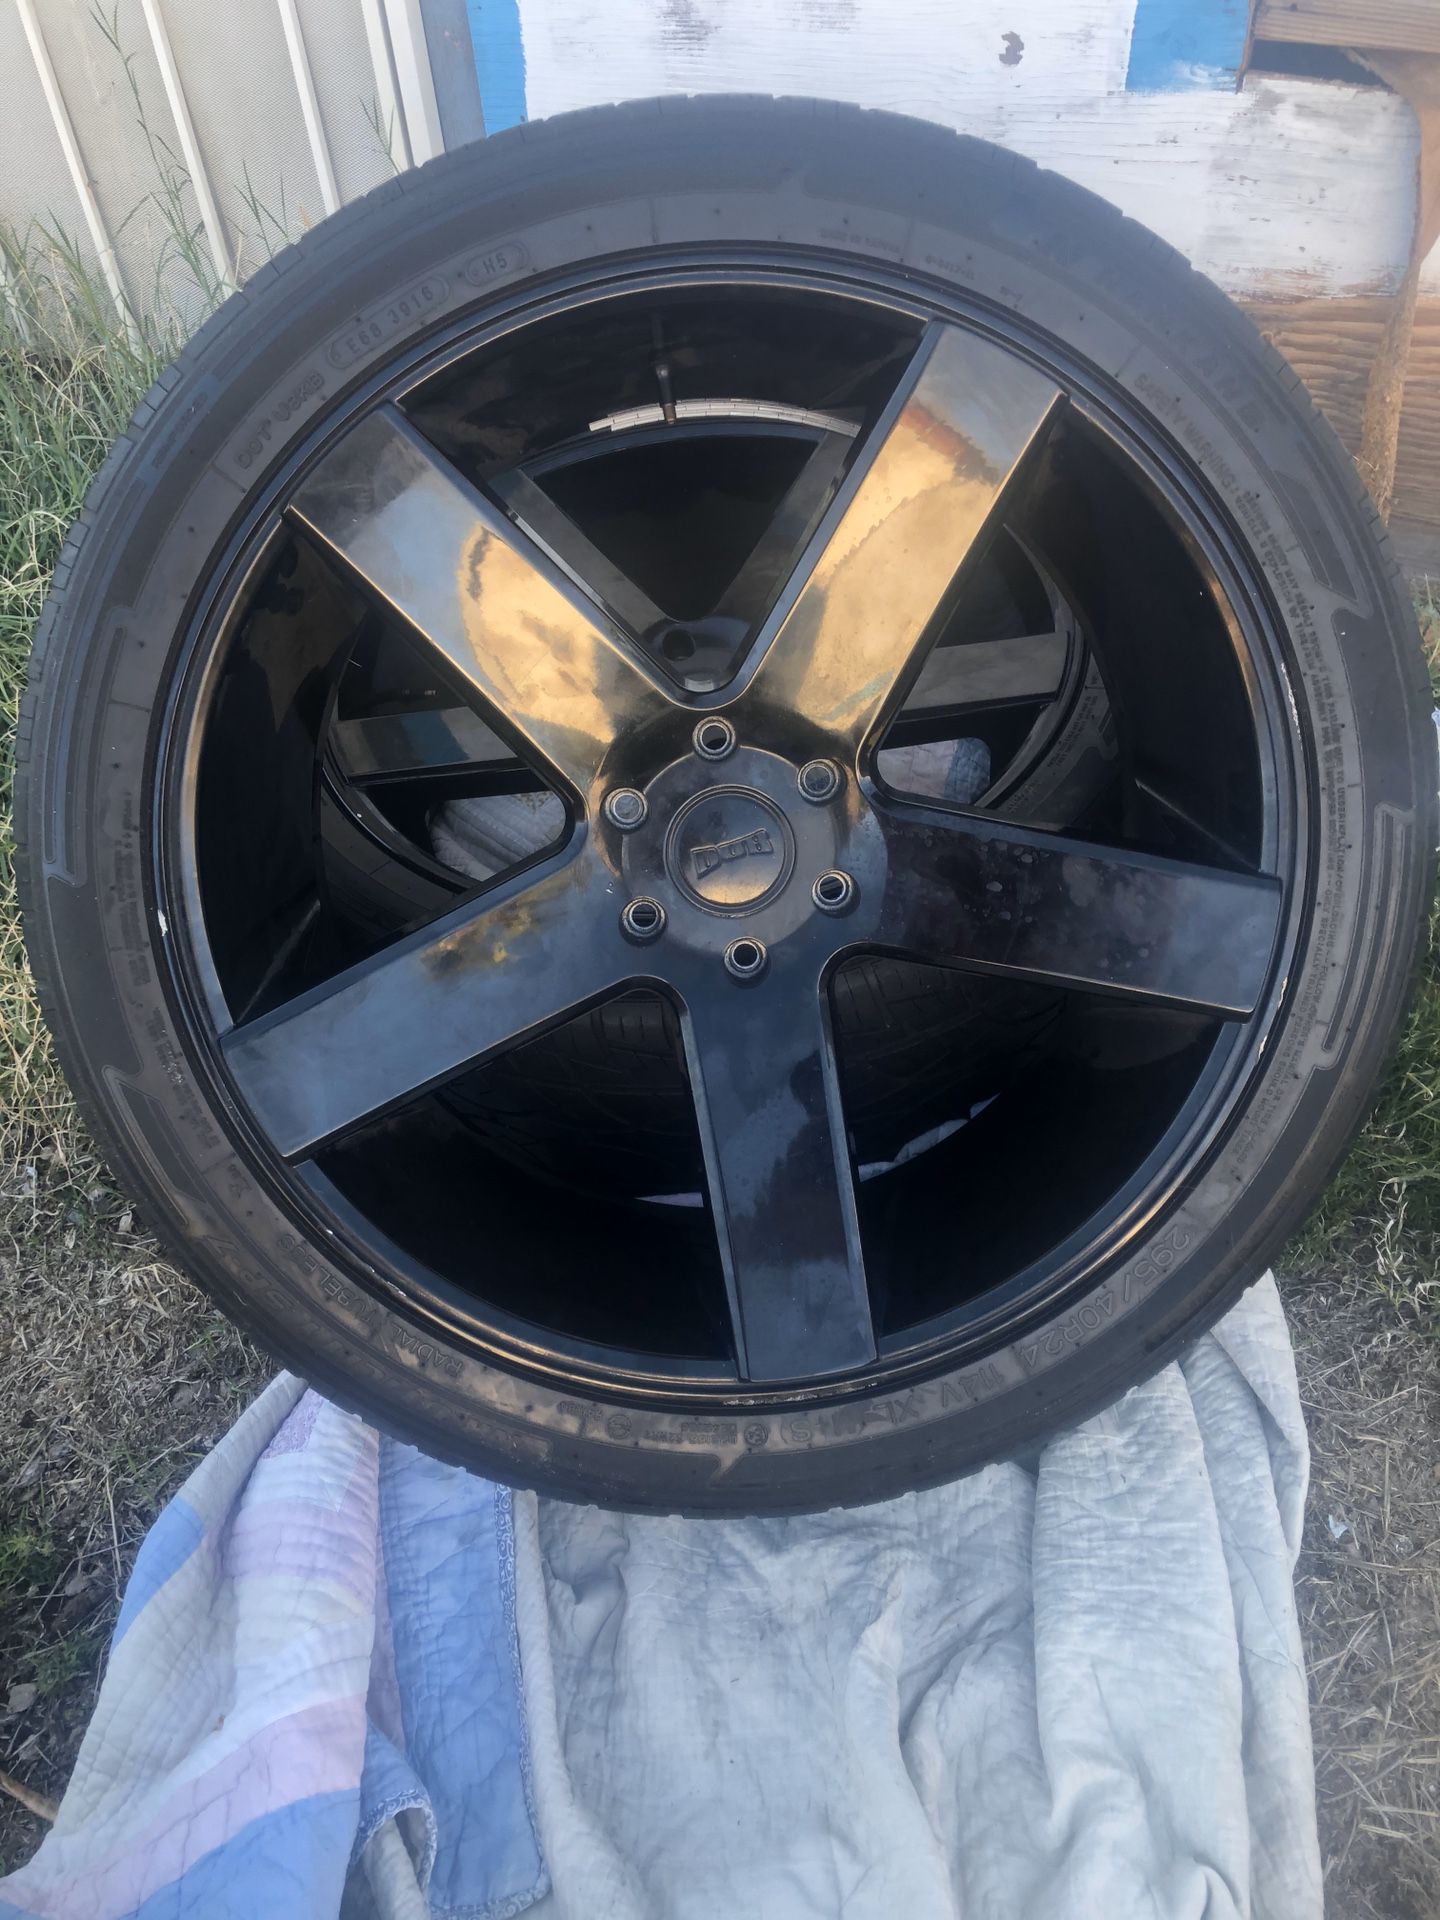 A set of tires